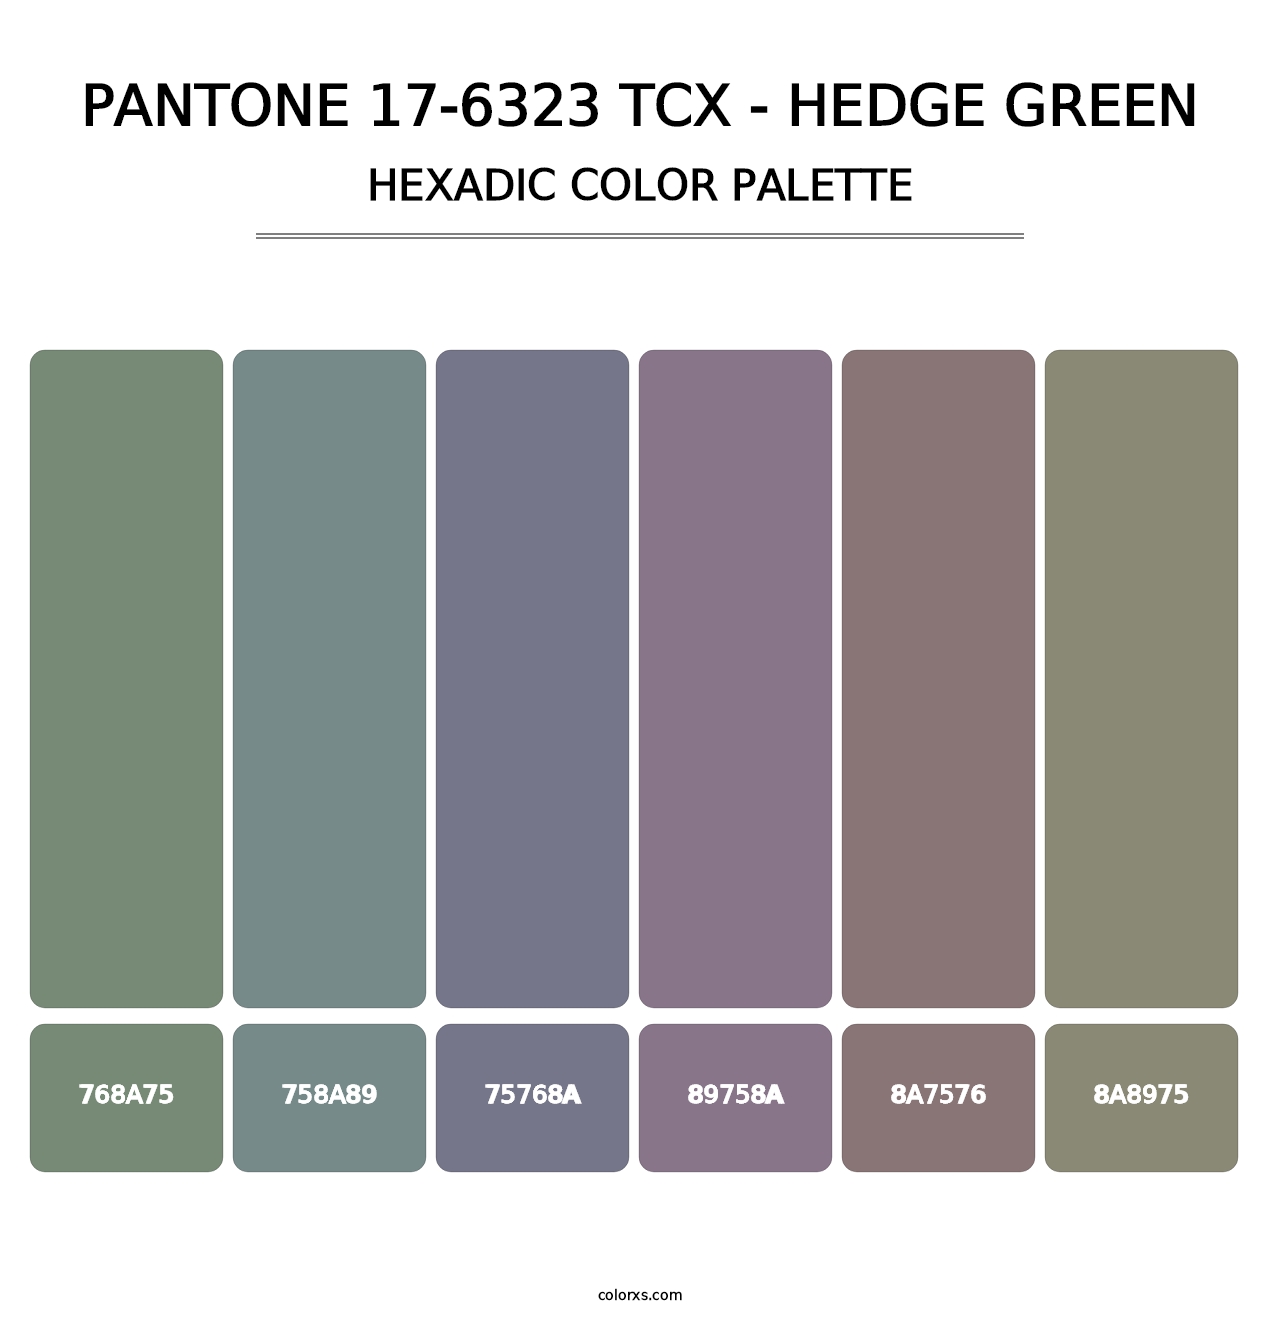 PANTONE 17-6323 TCX - Hedge Green - Hexadic Color Palette